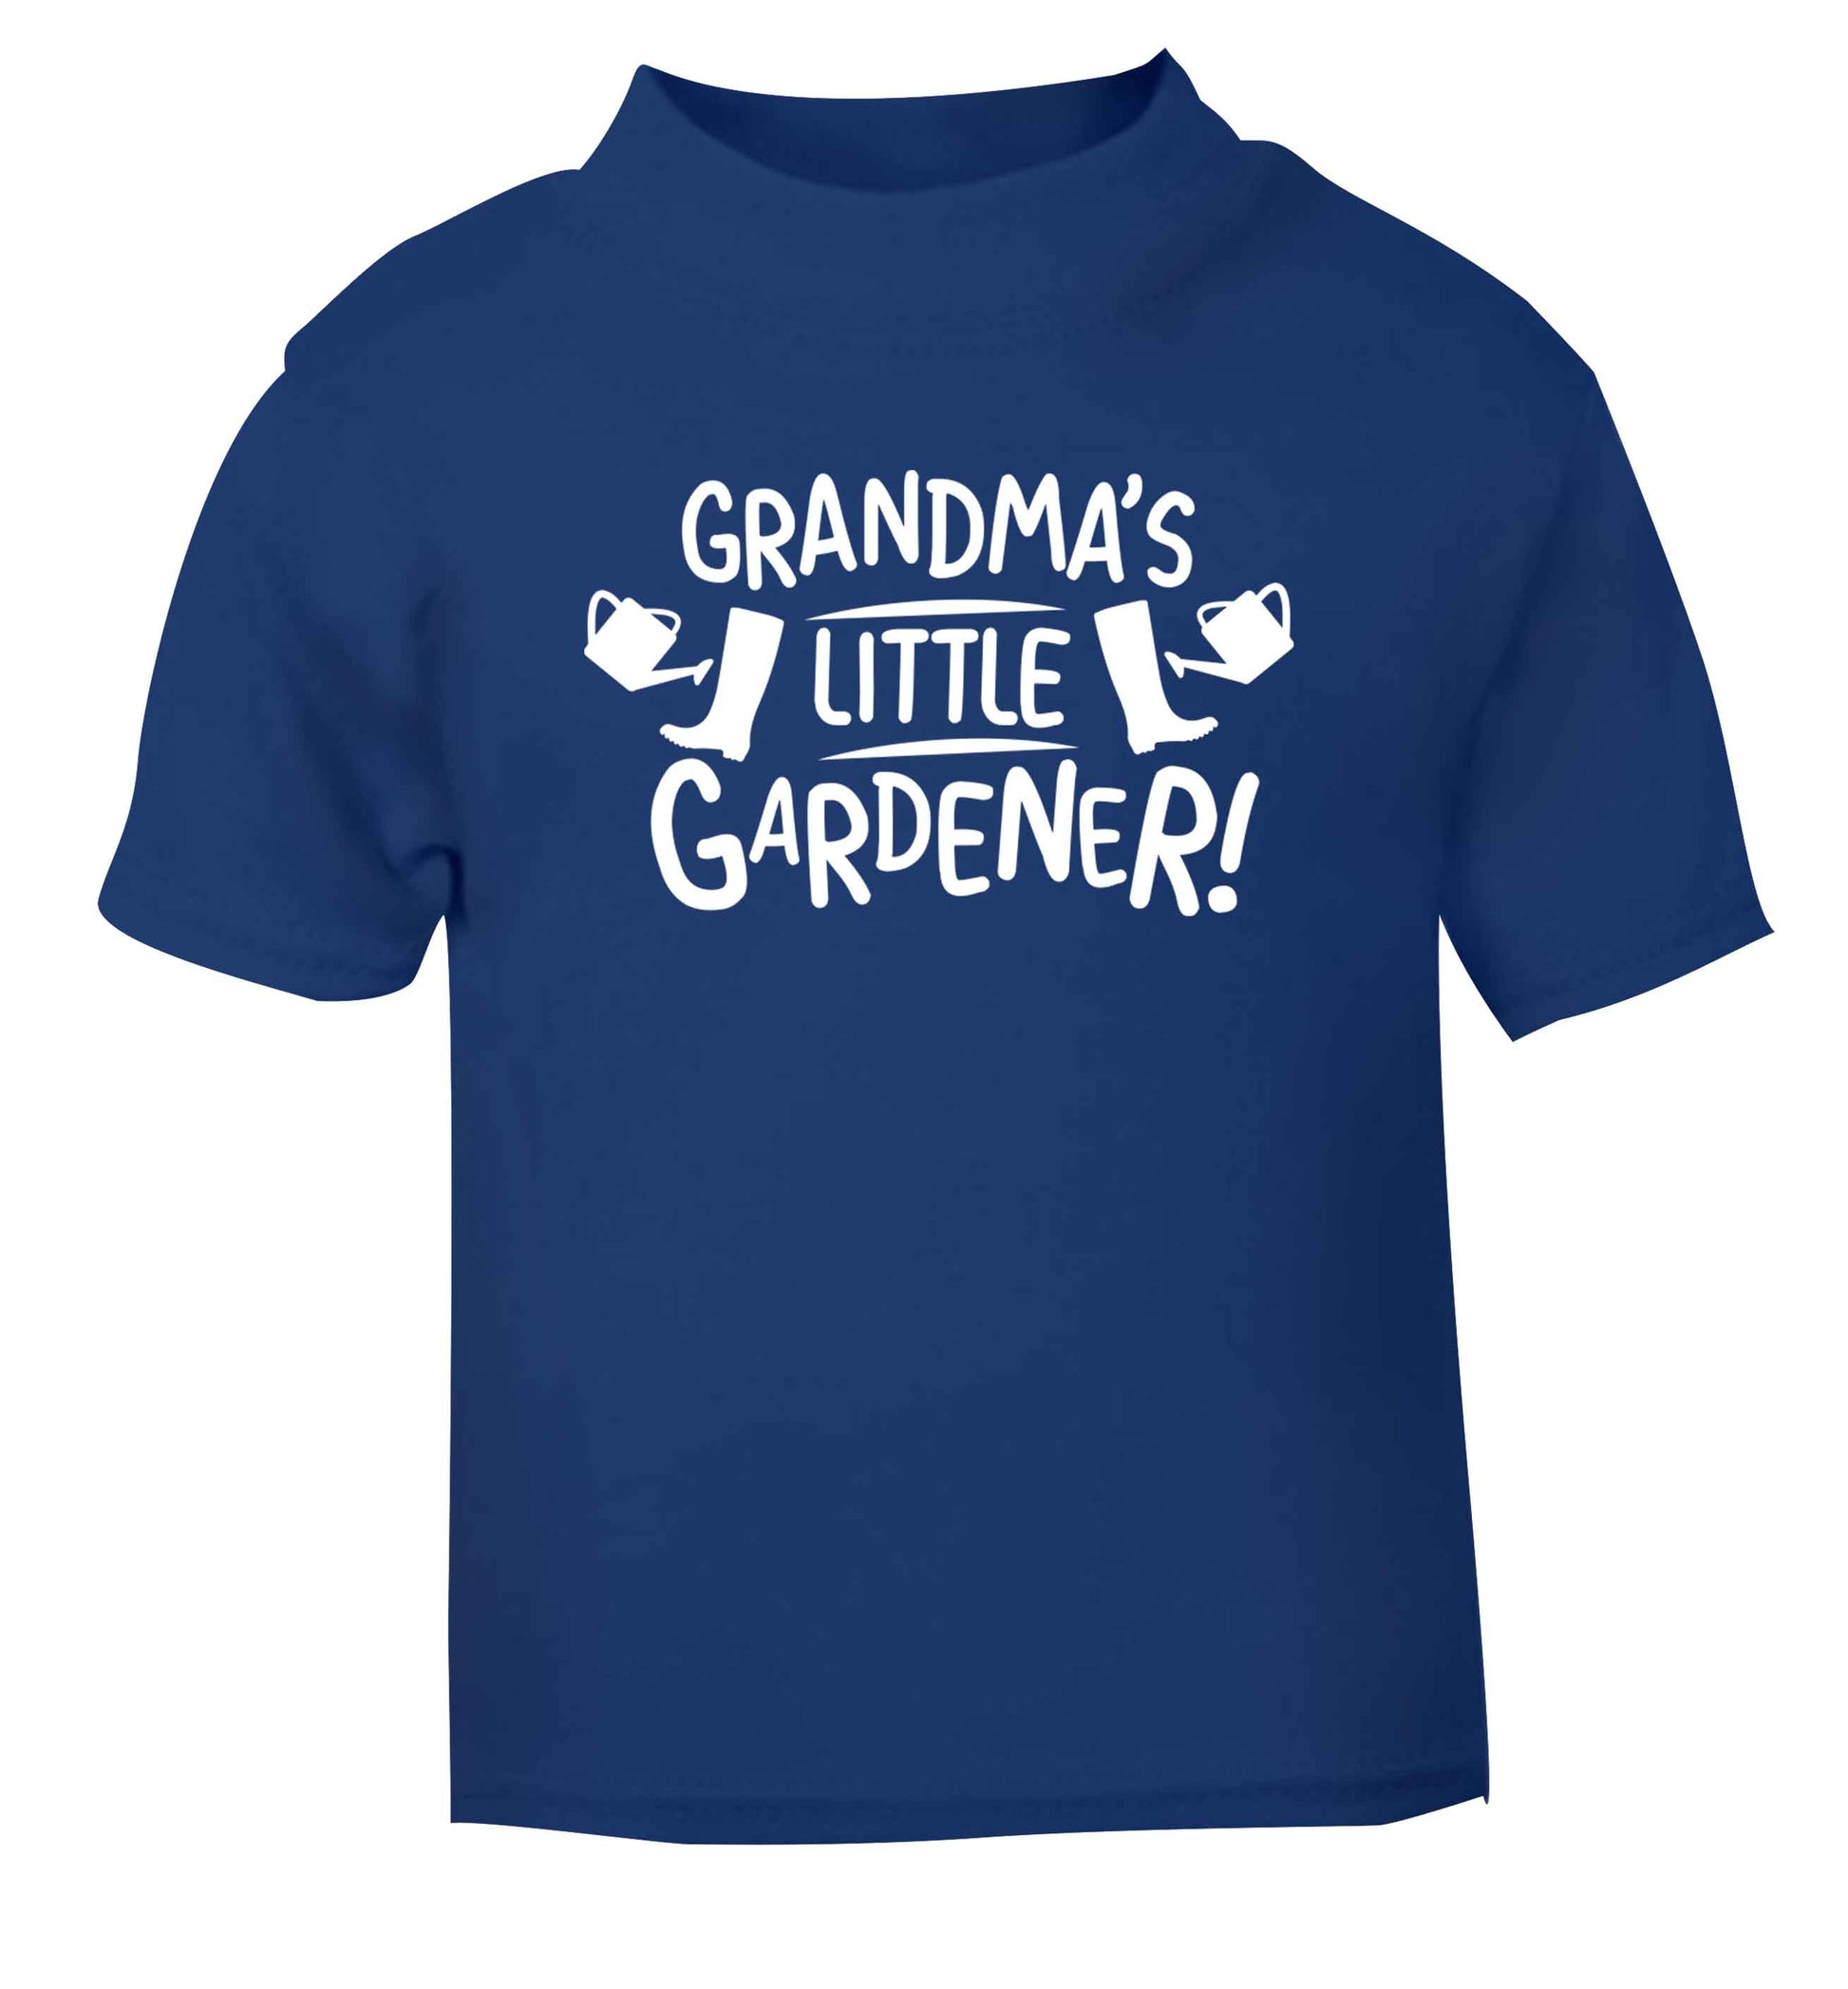 Grandma's little gardener blue Baby Toddler Tshirt 2 Years